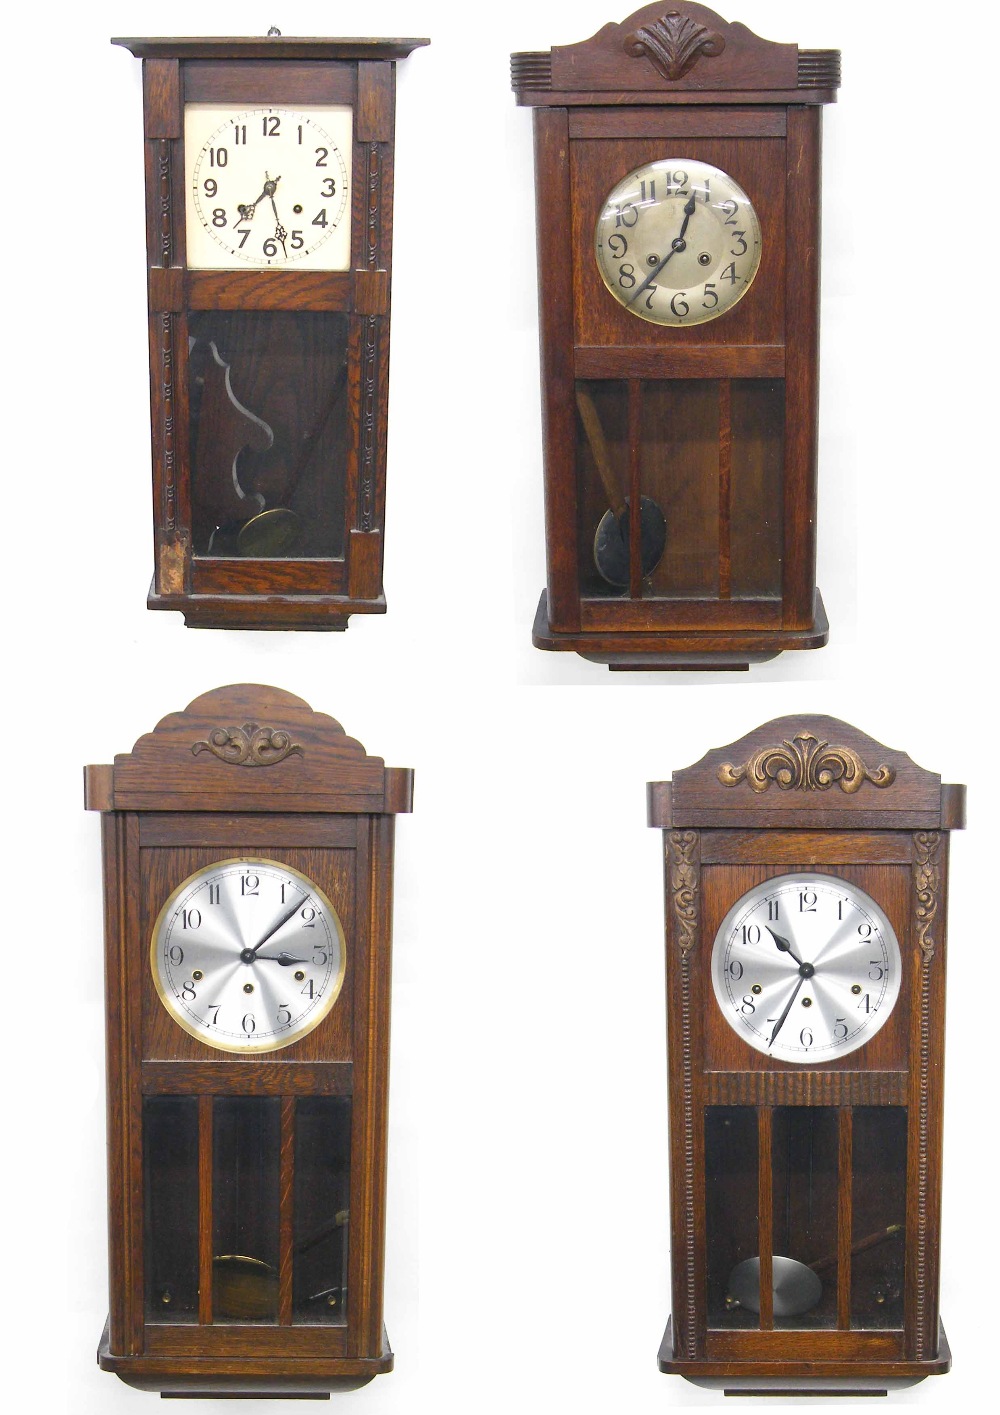 Two oak cased three train wall clocks; also two oak cased two train wall clocks, all approximately